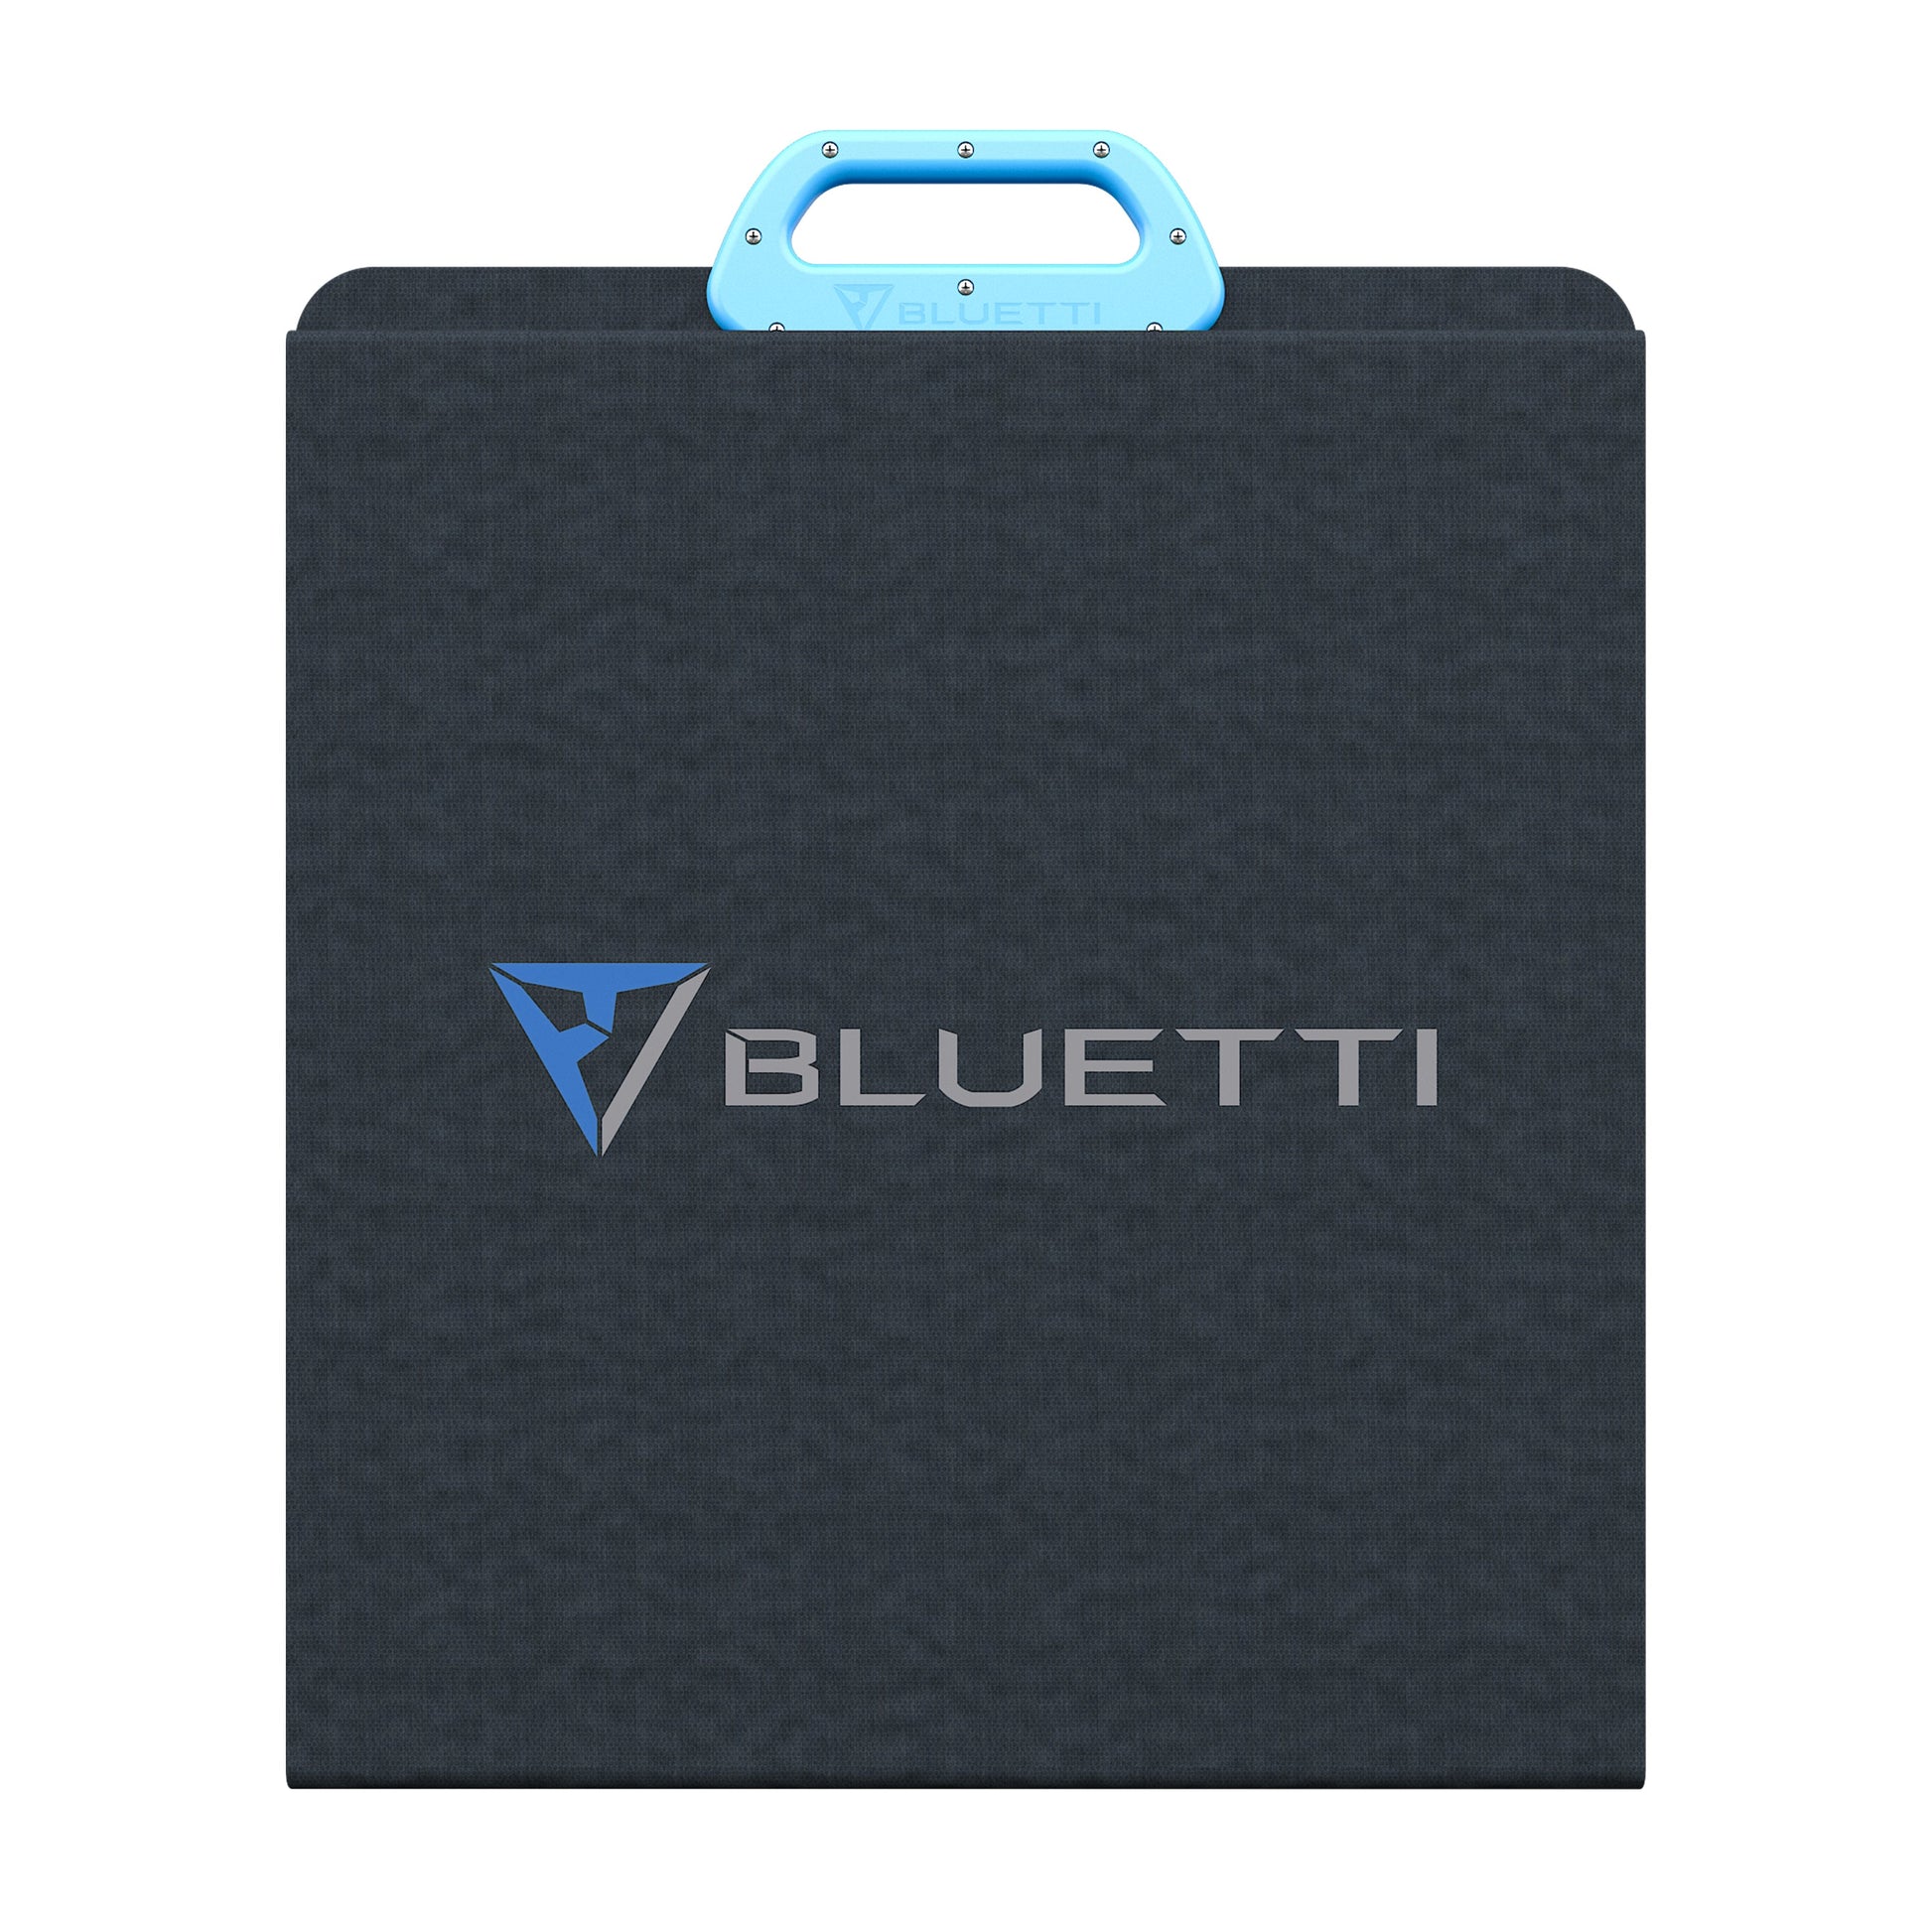 bluetti portable solar panels